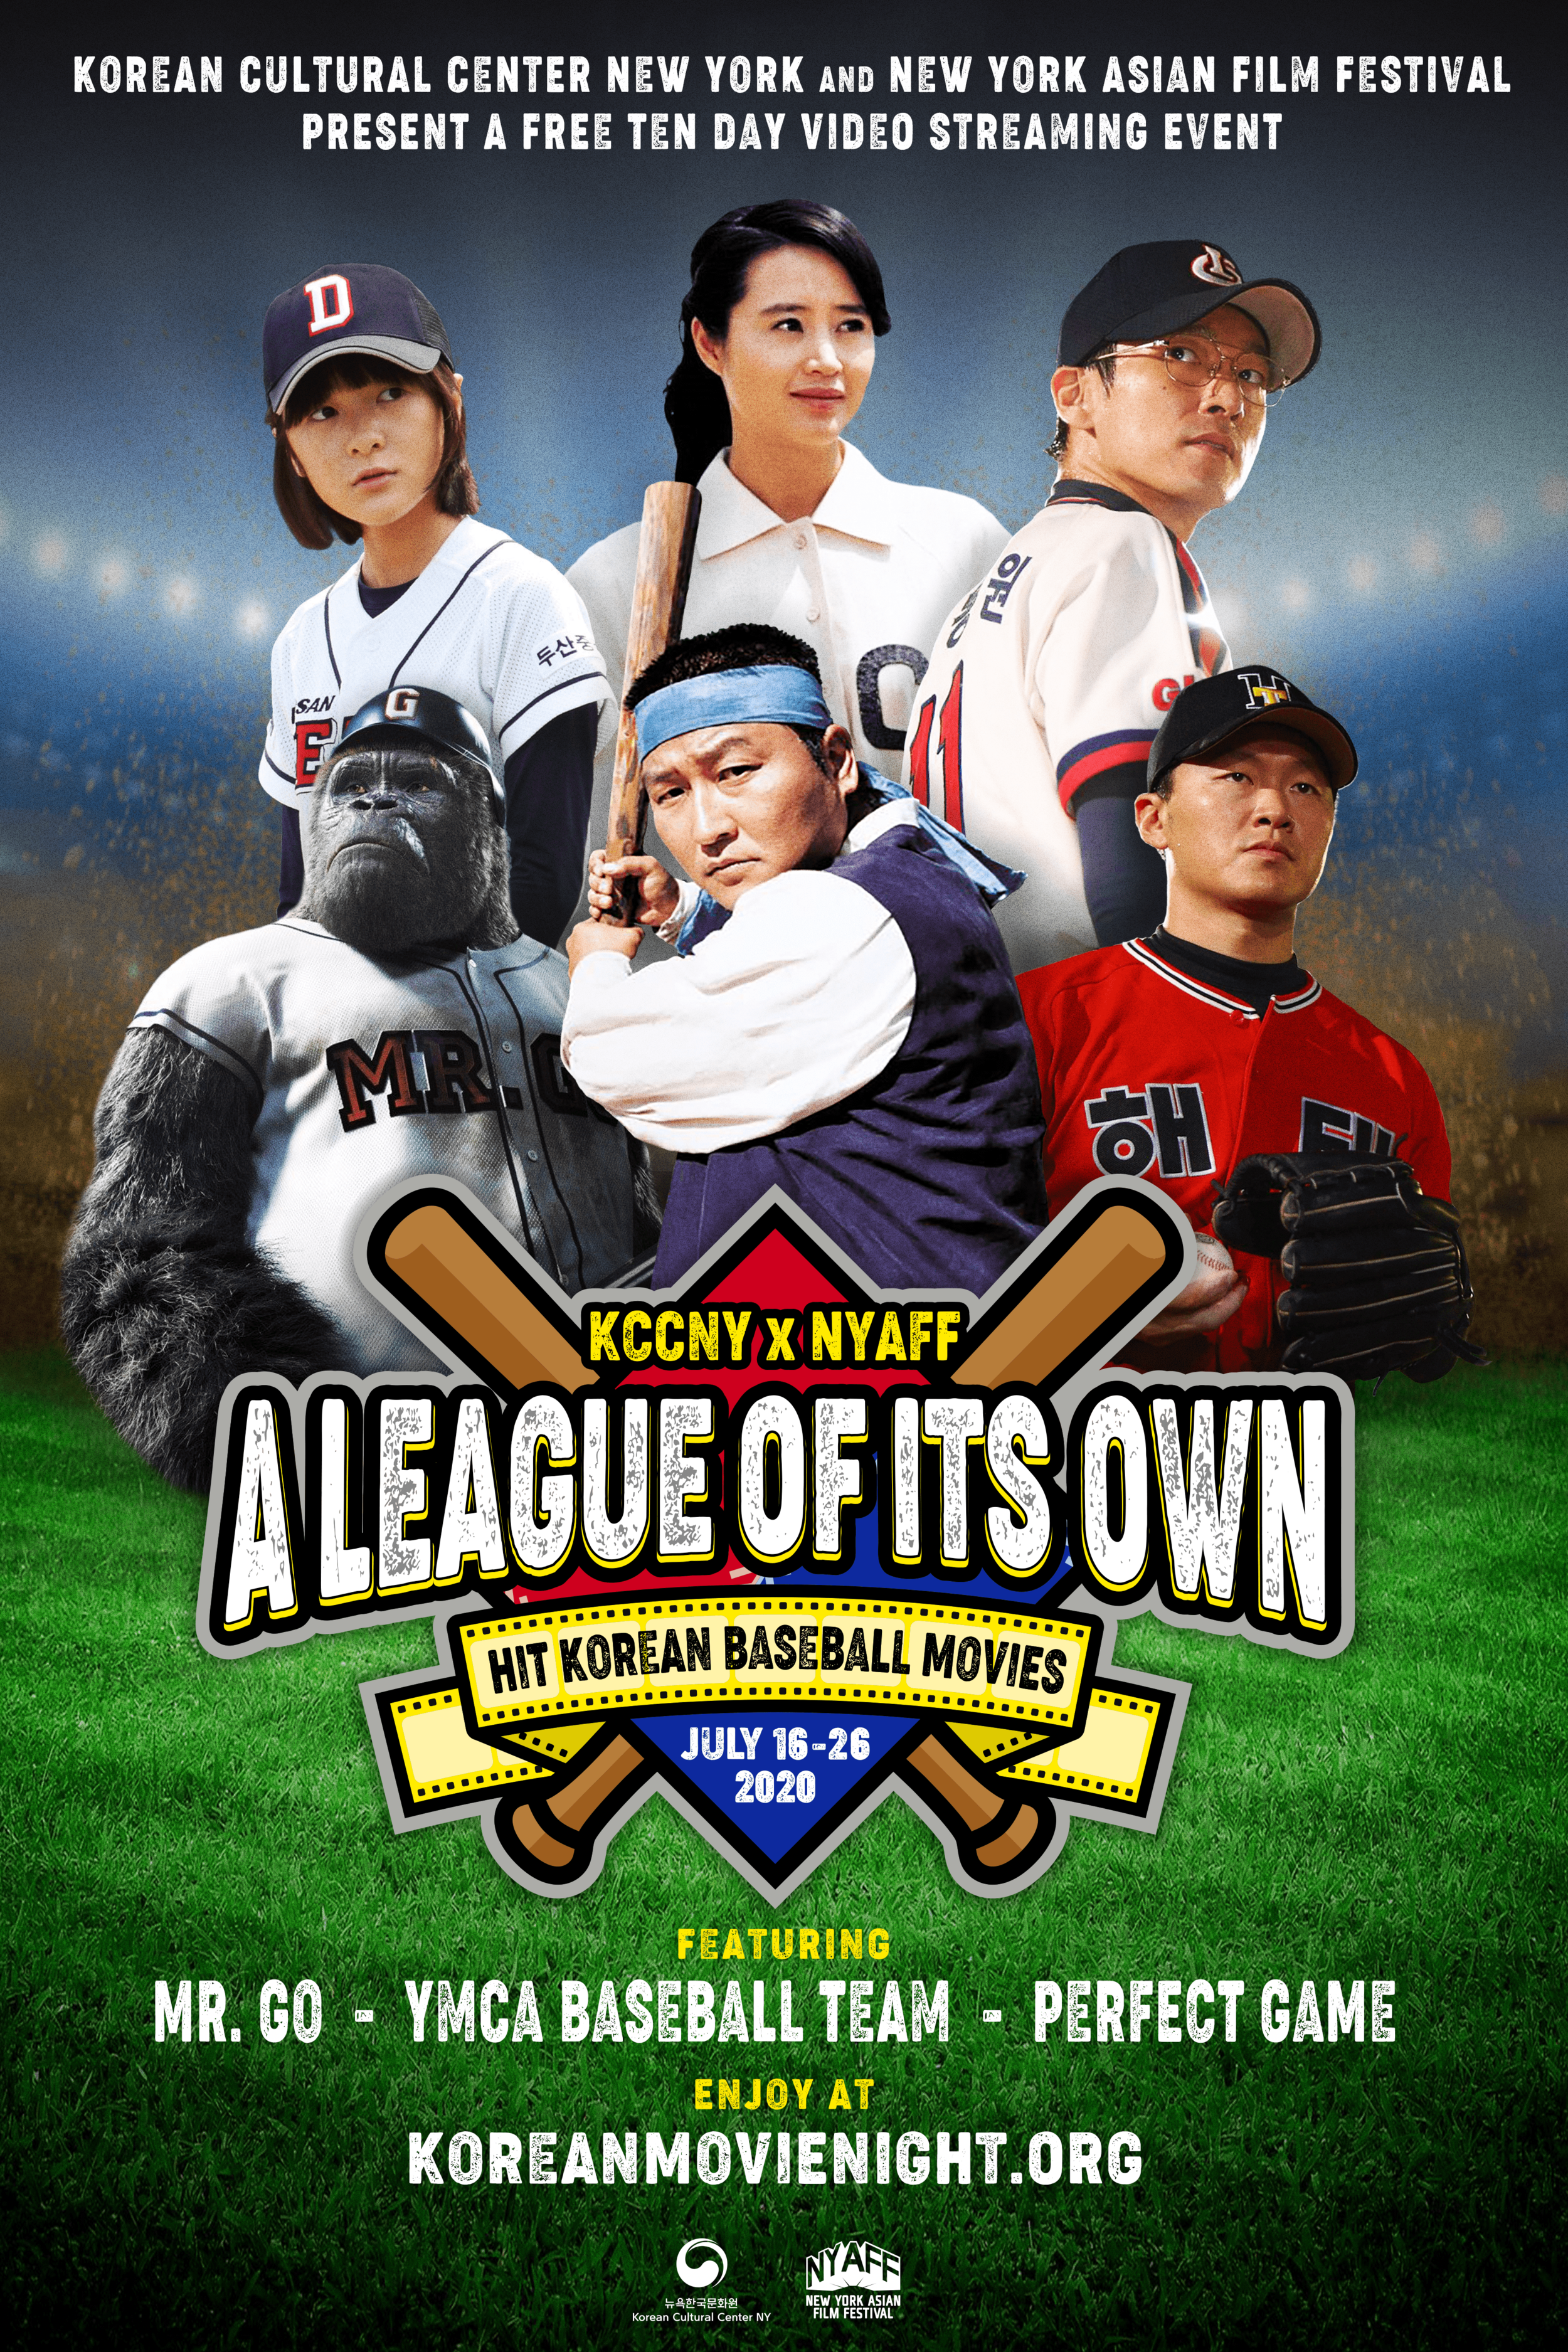 A League of Its Own Hit Korean baseball movies at home — Korean Cultural Center New York